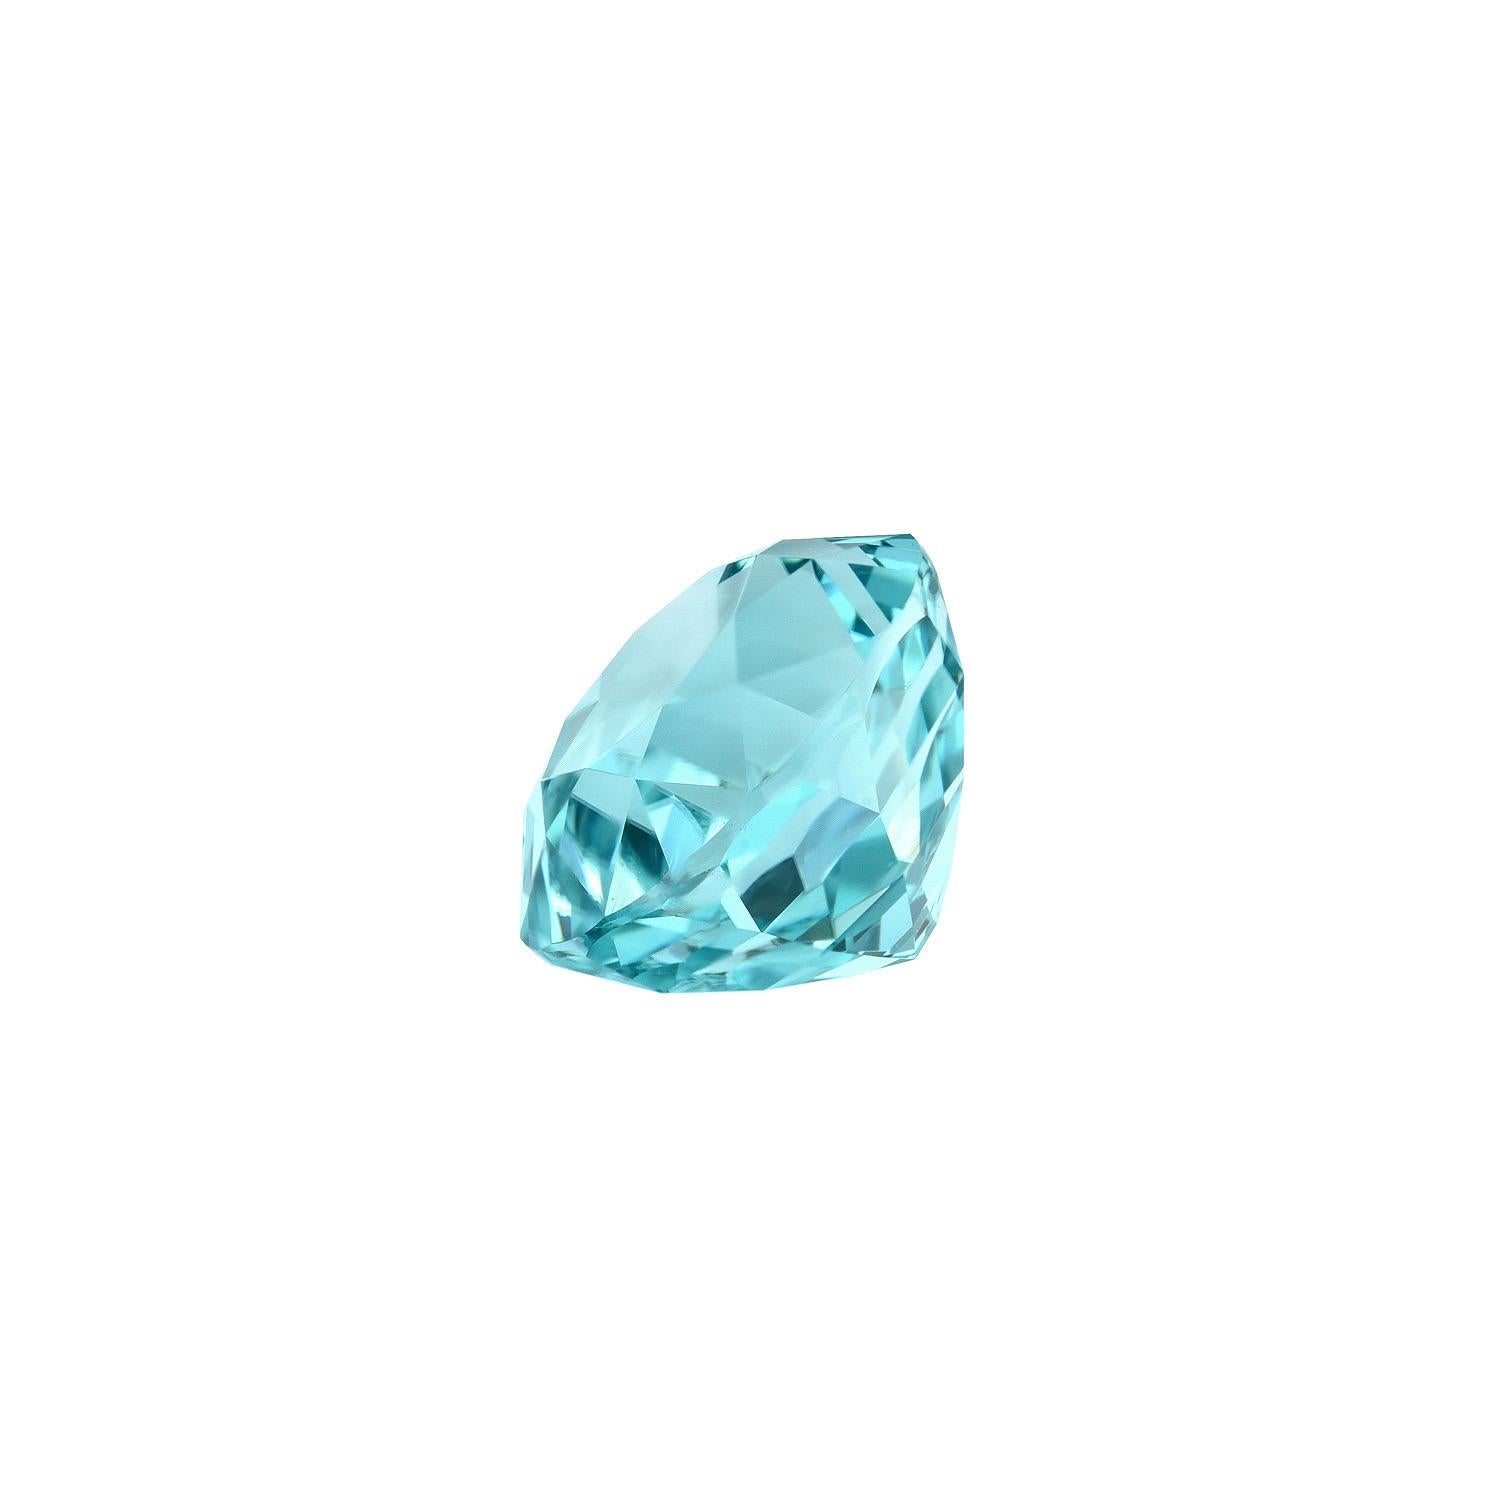 Oval Cut Blue Tourmaline Ring Gem 5.21 Carat Oval Unmounted Loose Gemstone For Sale